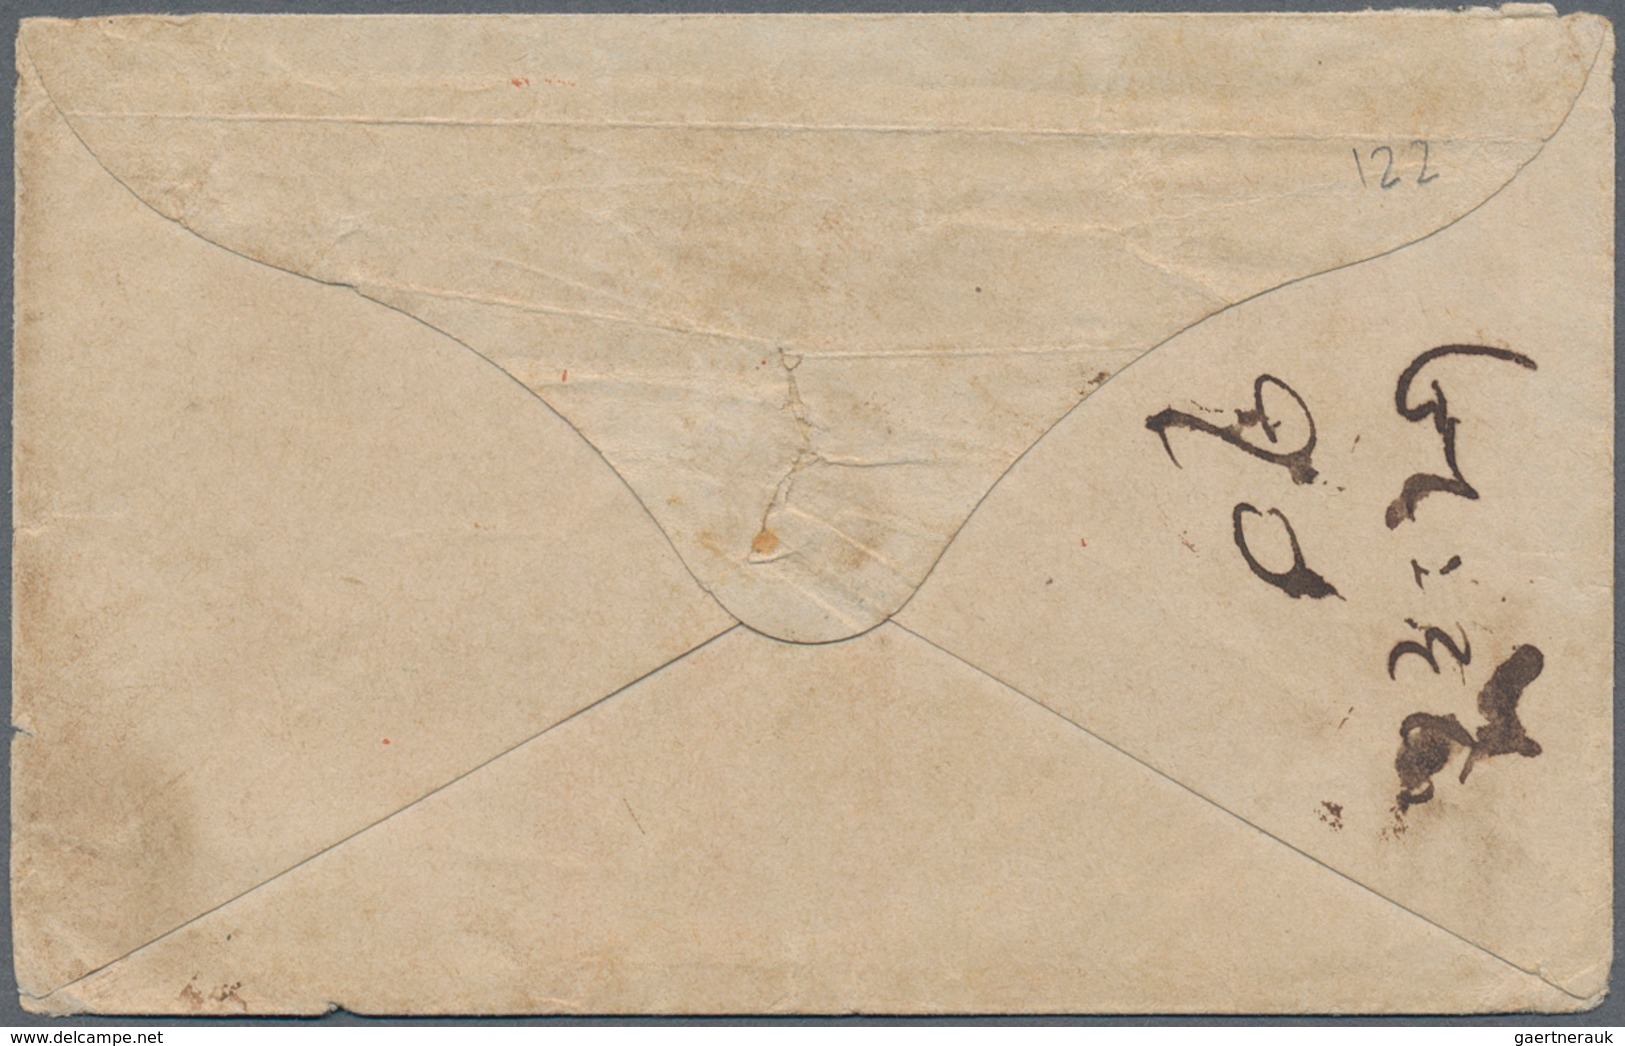 Aden: 1847-60's: Boxed Shipletter Handstamp "ADEN/SHIPLETTER//PAID" In Red (Proud SL2), Used At Aden - Yemen